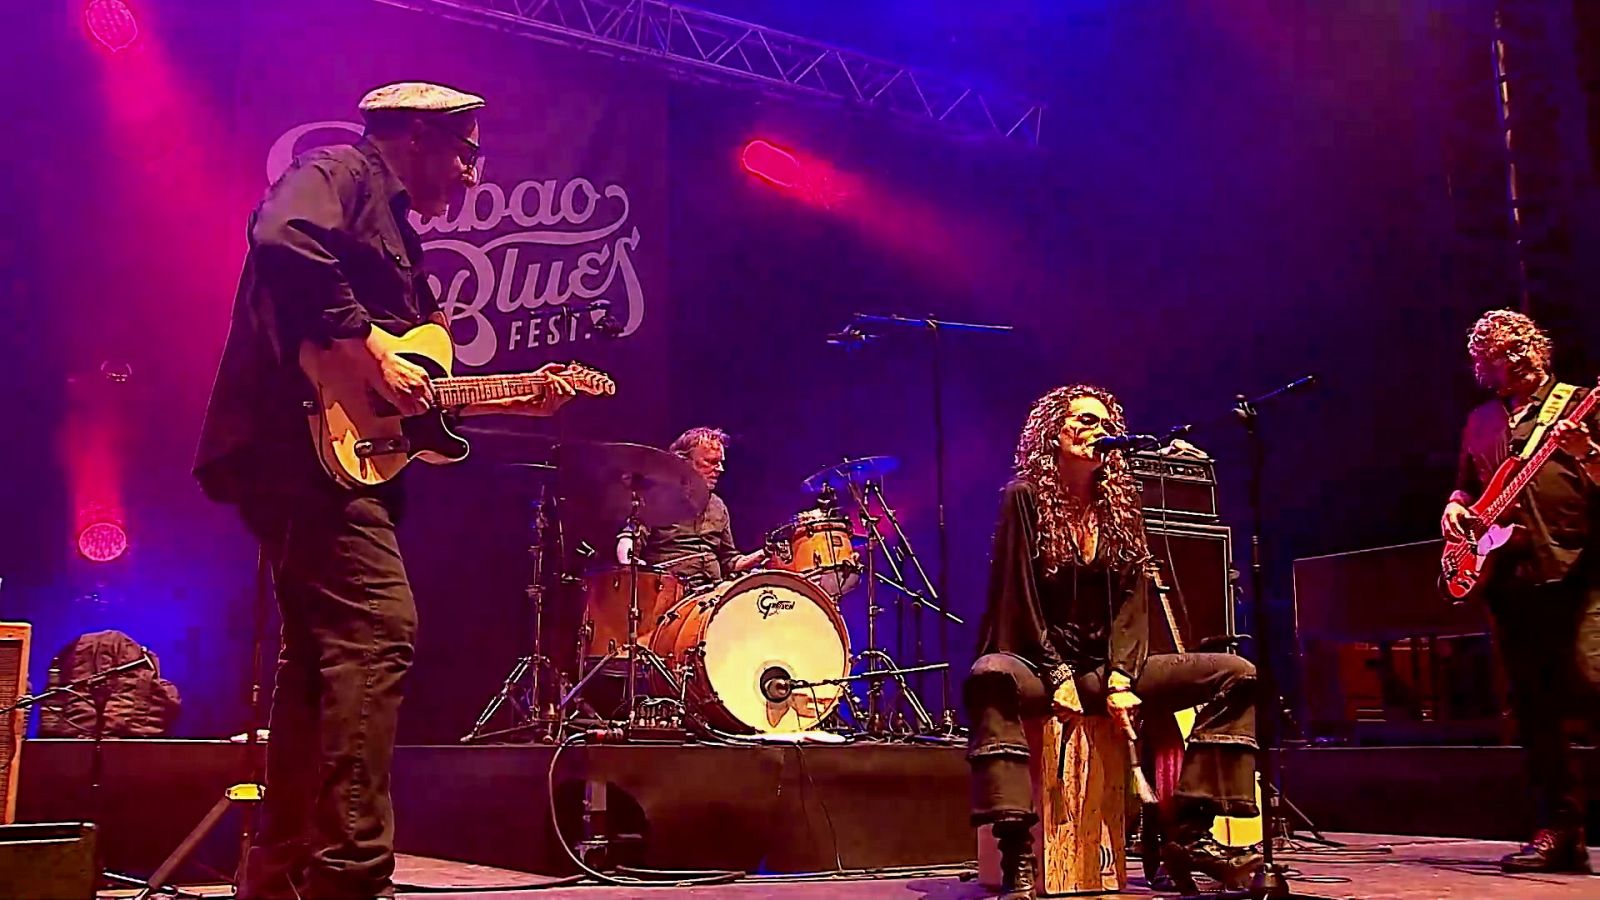 Festivales de verano - Bilbao Blues Festival: Dana Fuchs